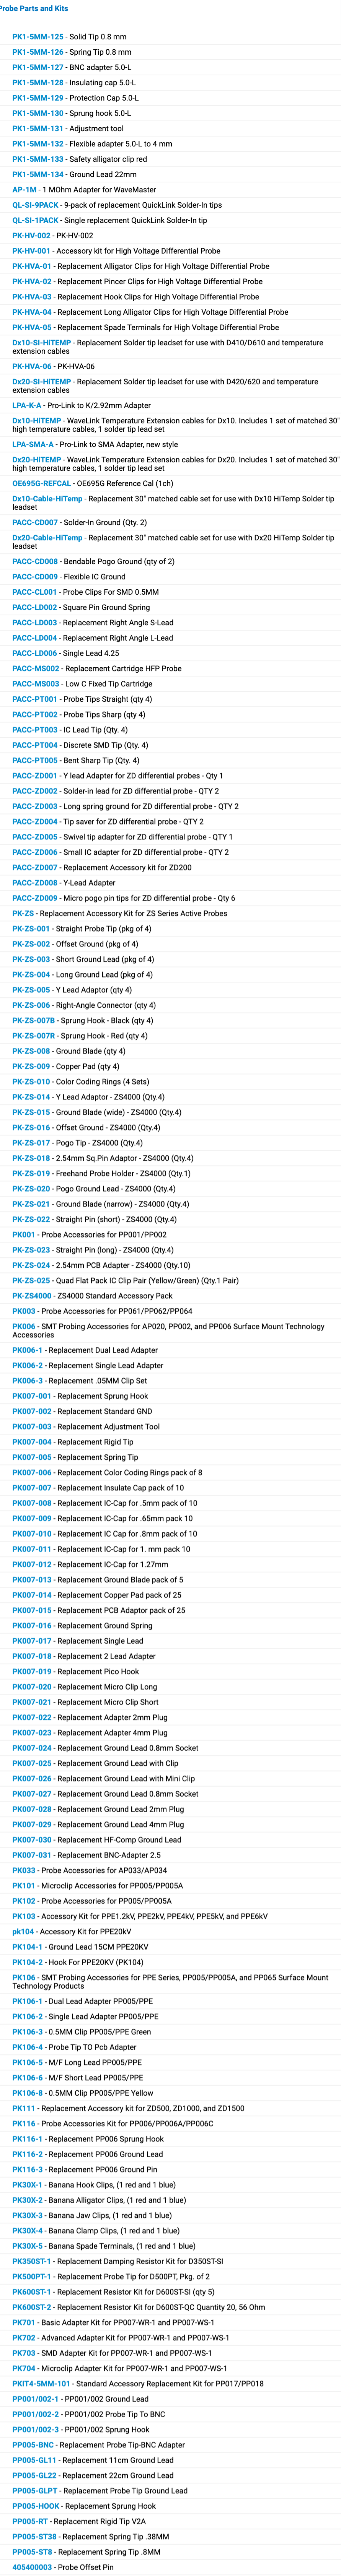 screencapture-teledynelecroy-probes-probe-parts-and-kits-2020-04-29-13_16_29